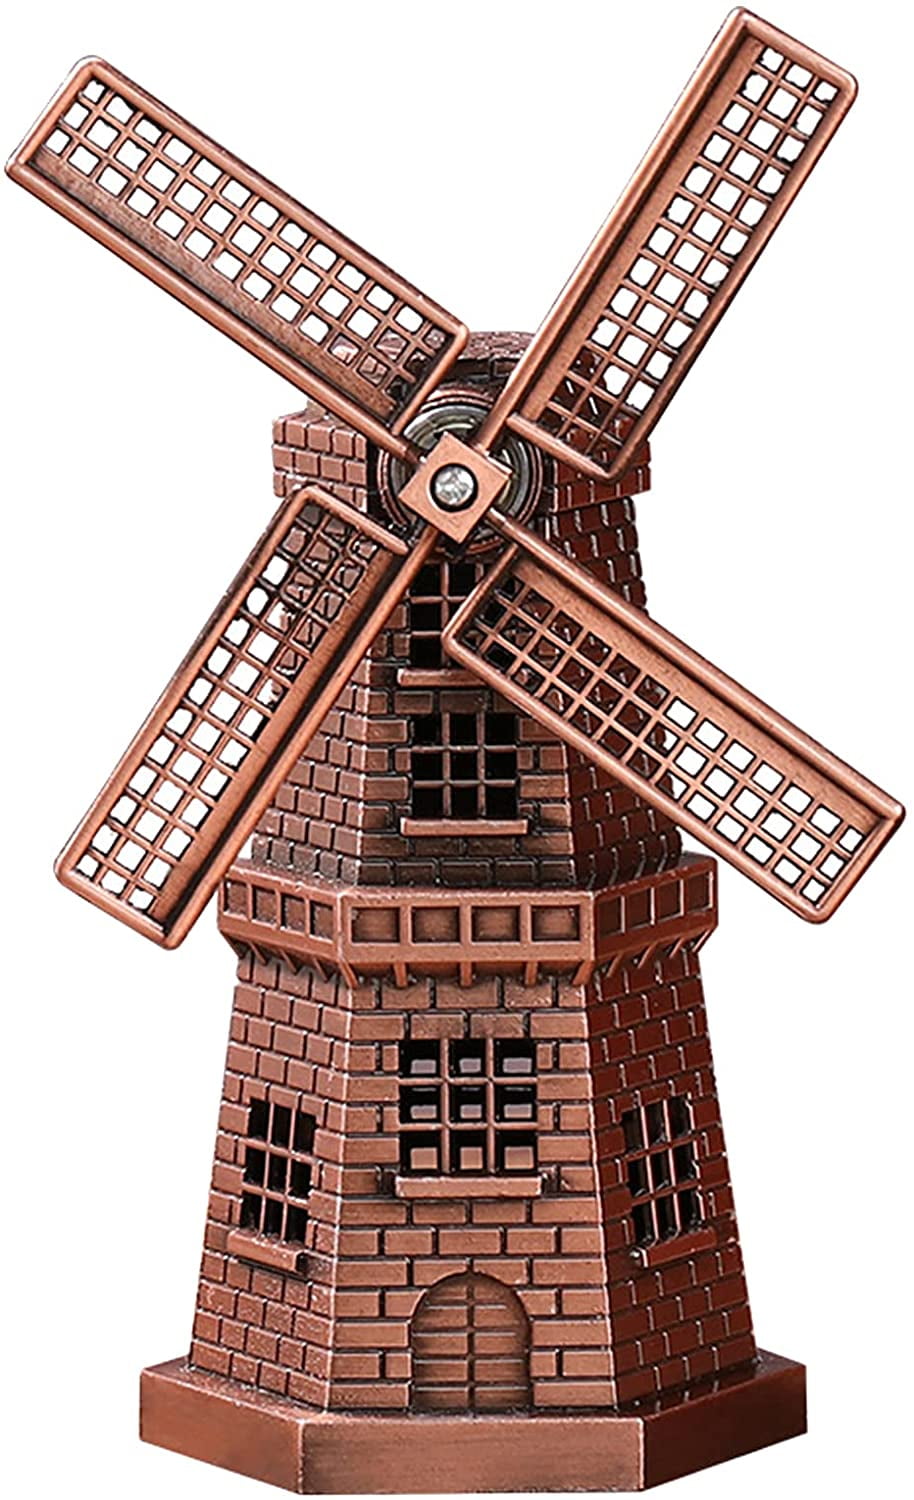 Dutch Windmill Model Creative Furniture Ornaments Decoration Home Decor Gift 1PC 